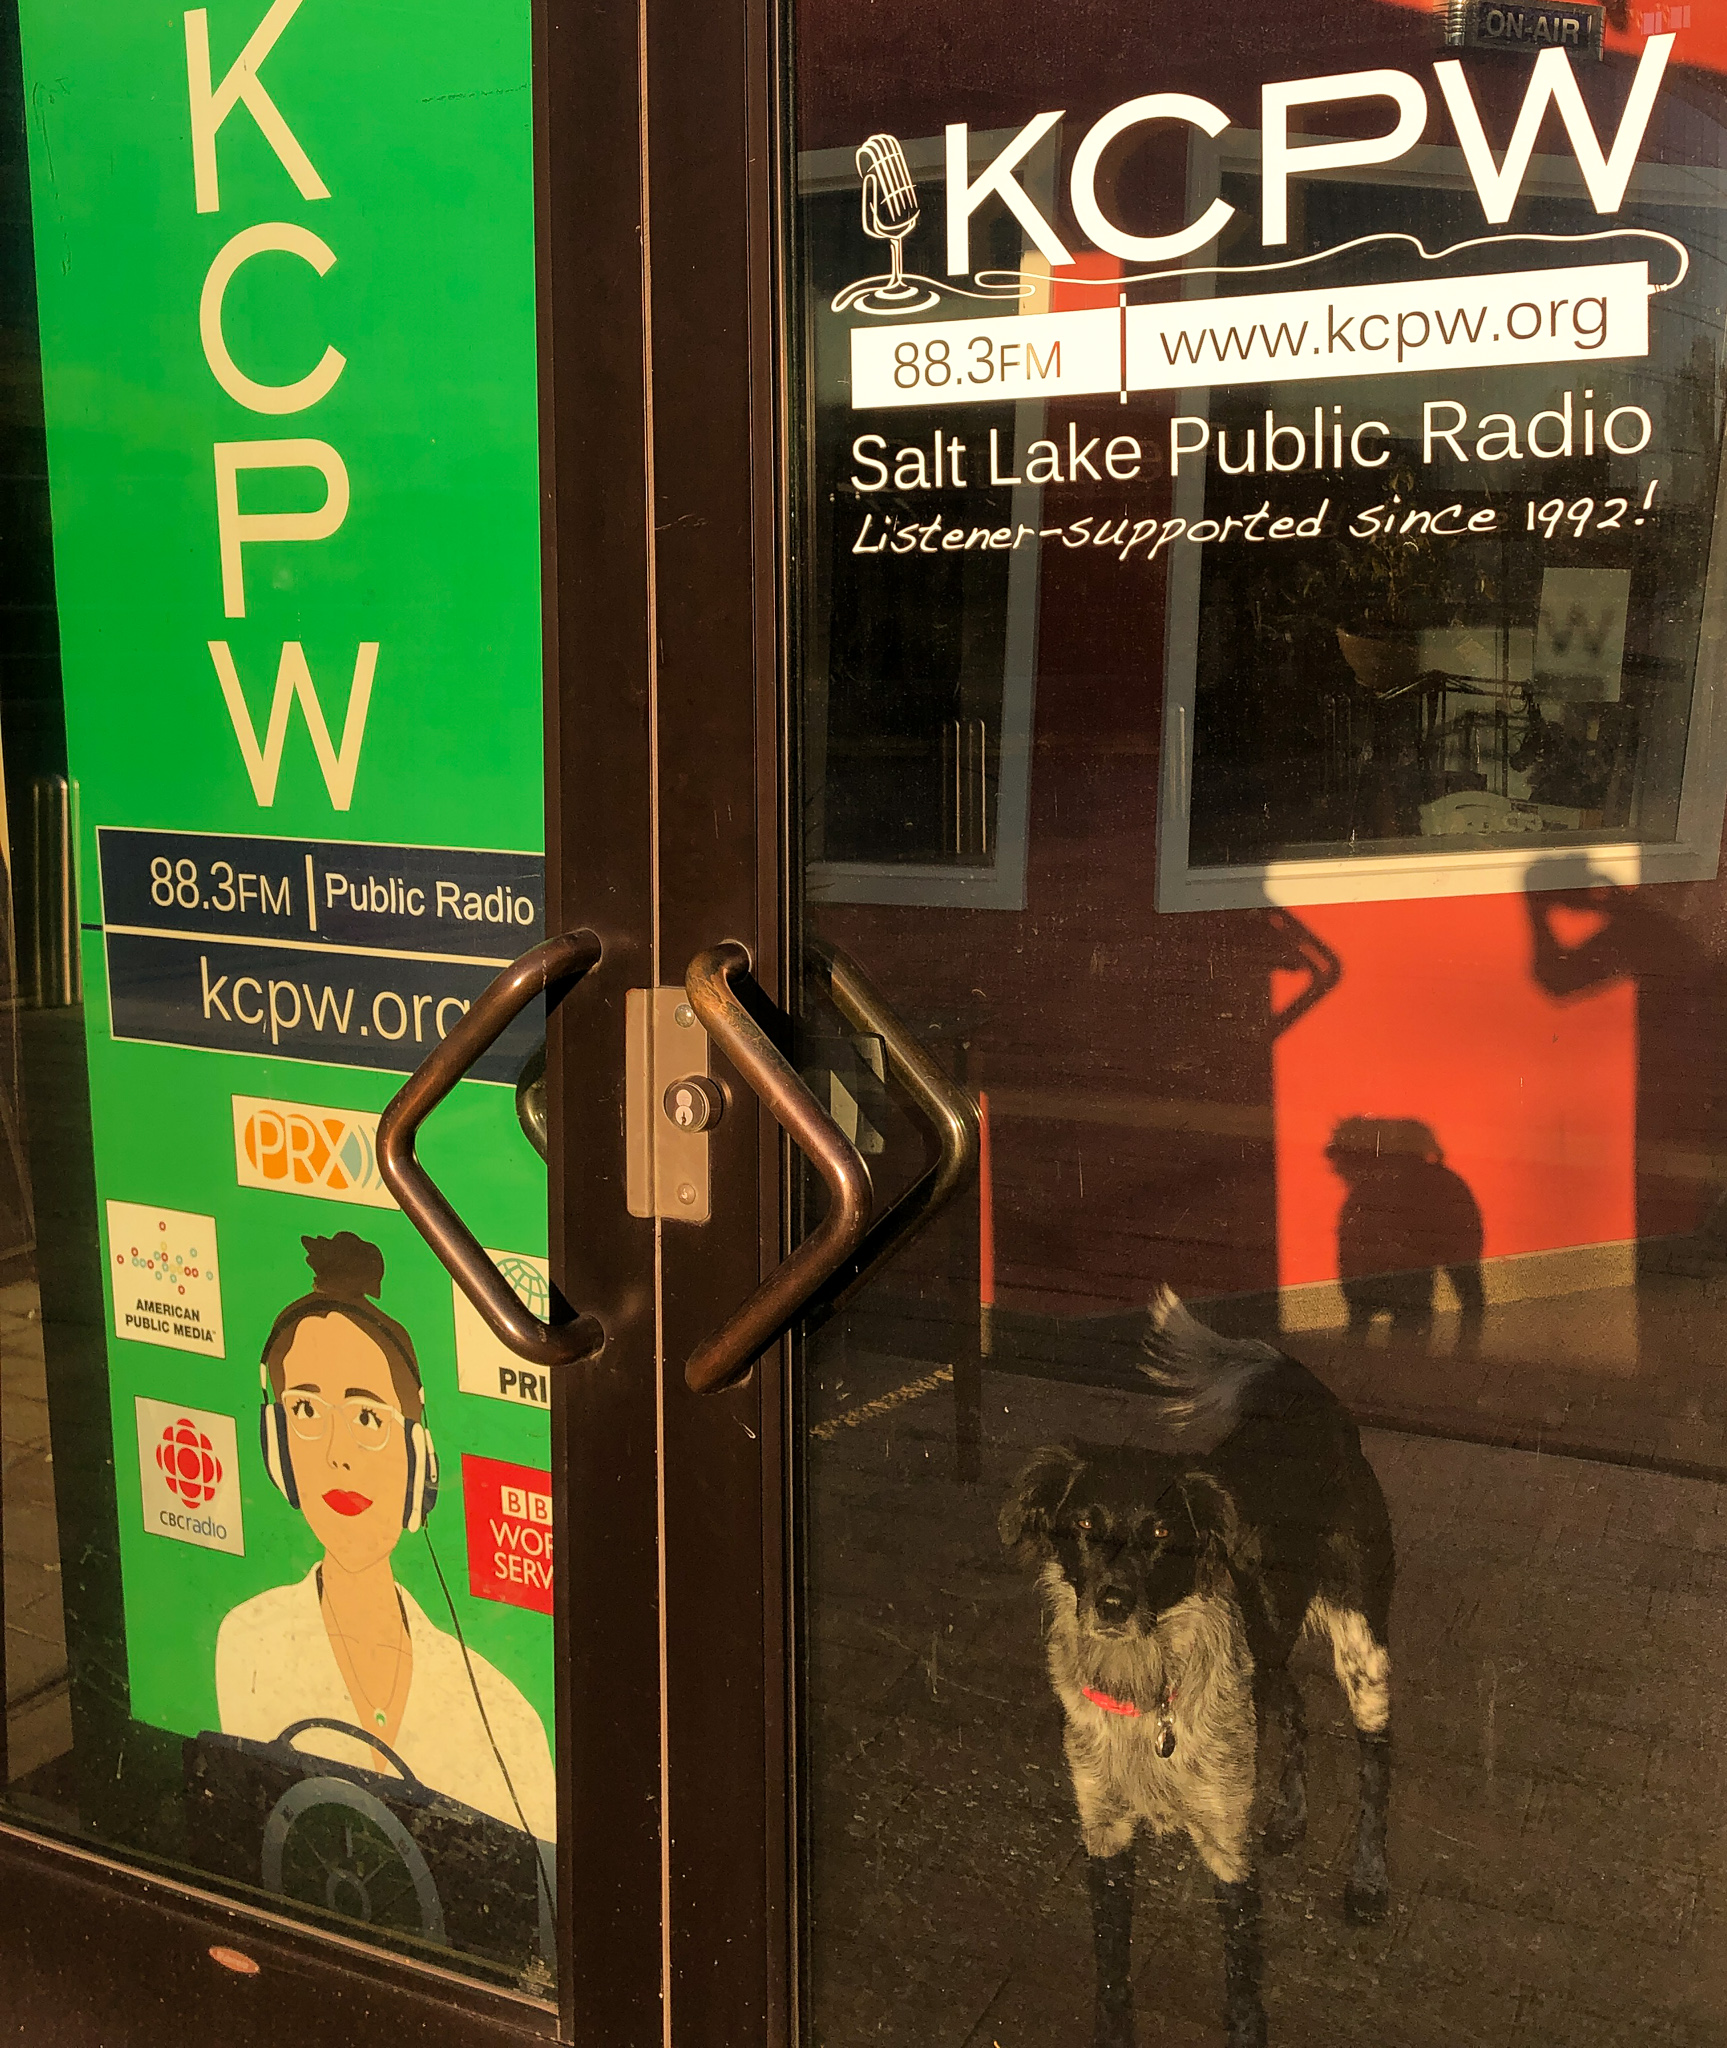 KCPW 88.3 FM Salt Lake Public Radio